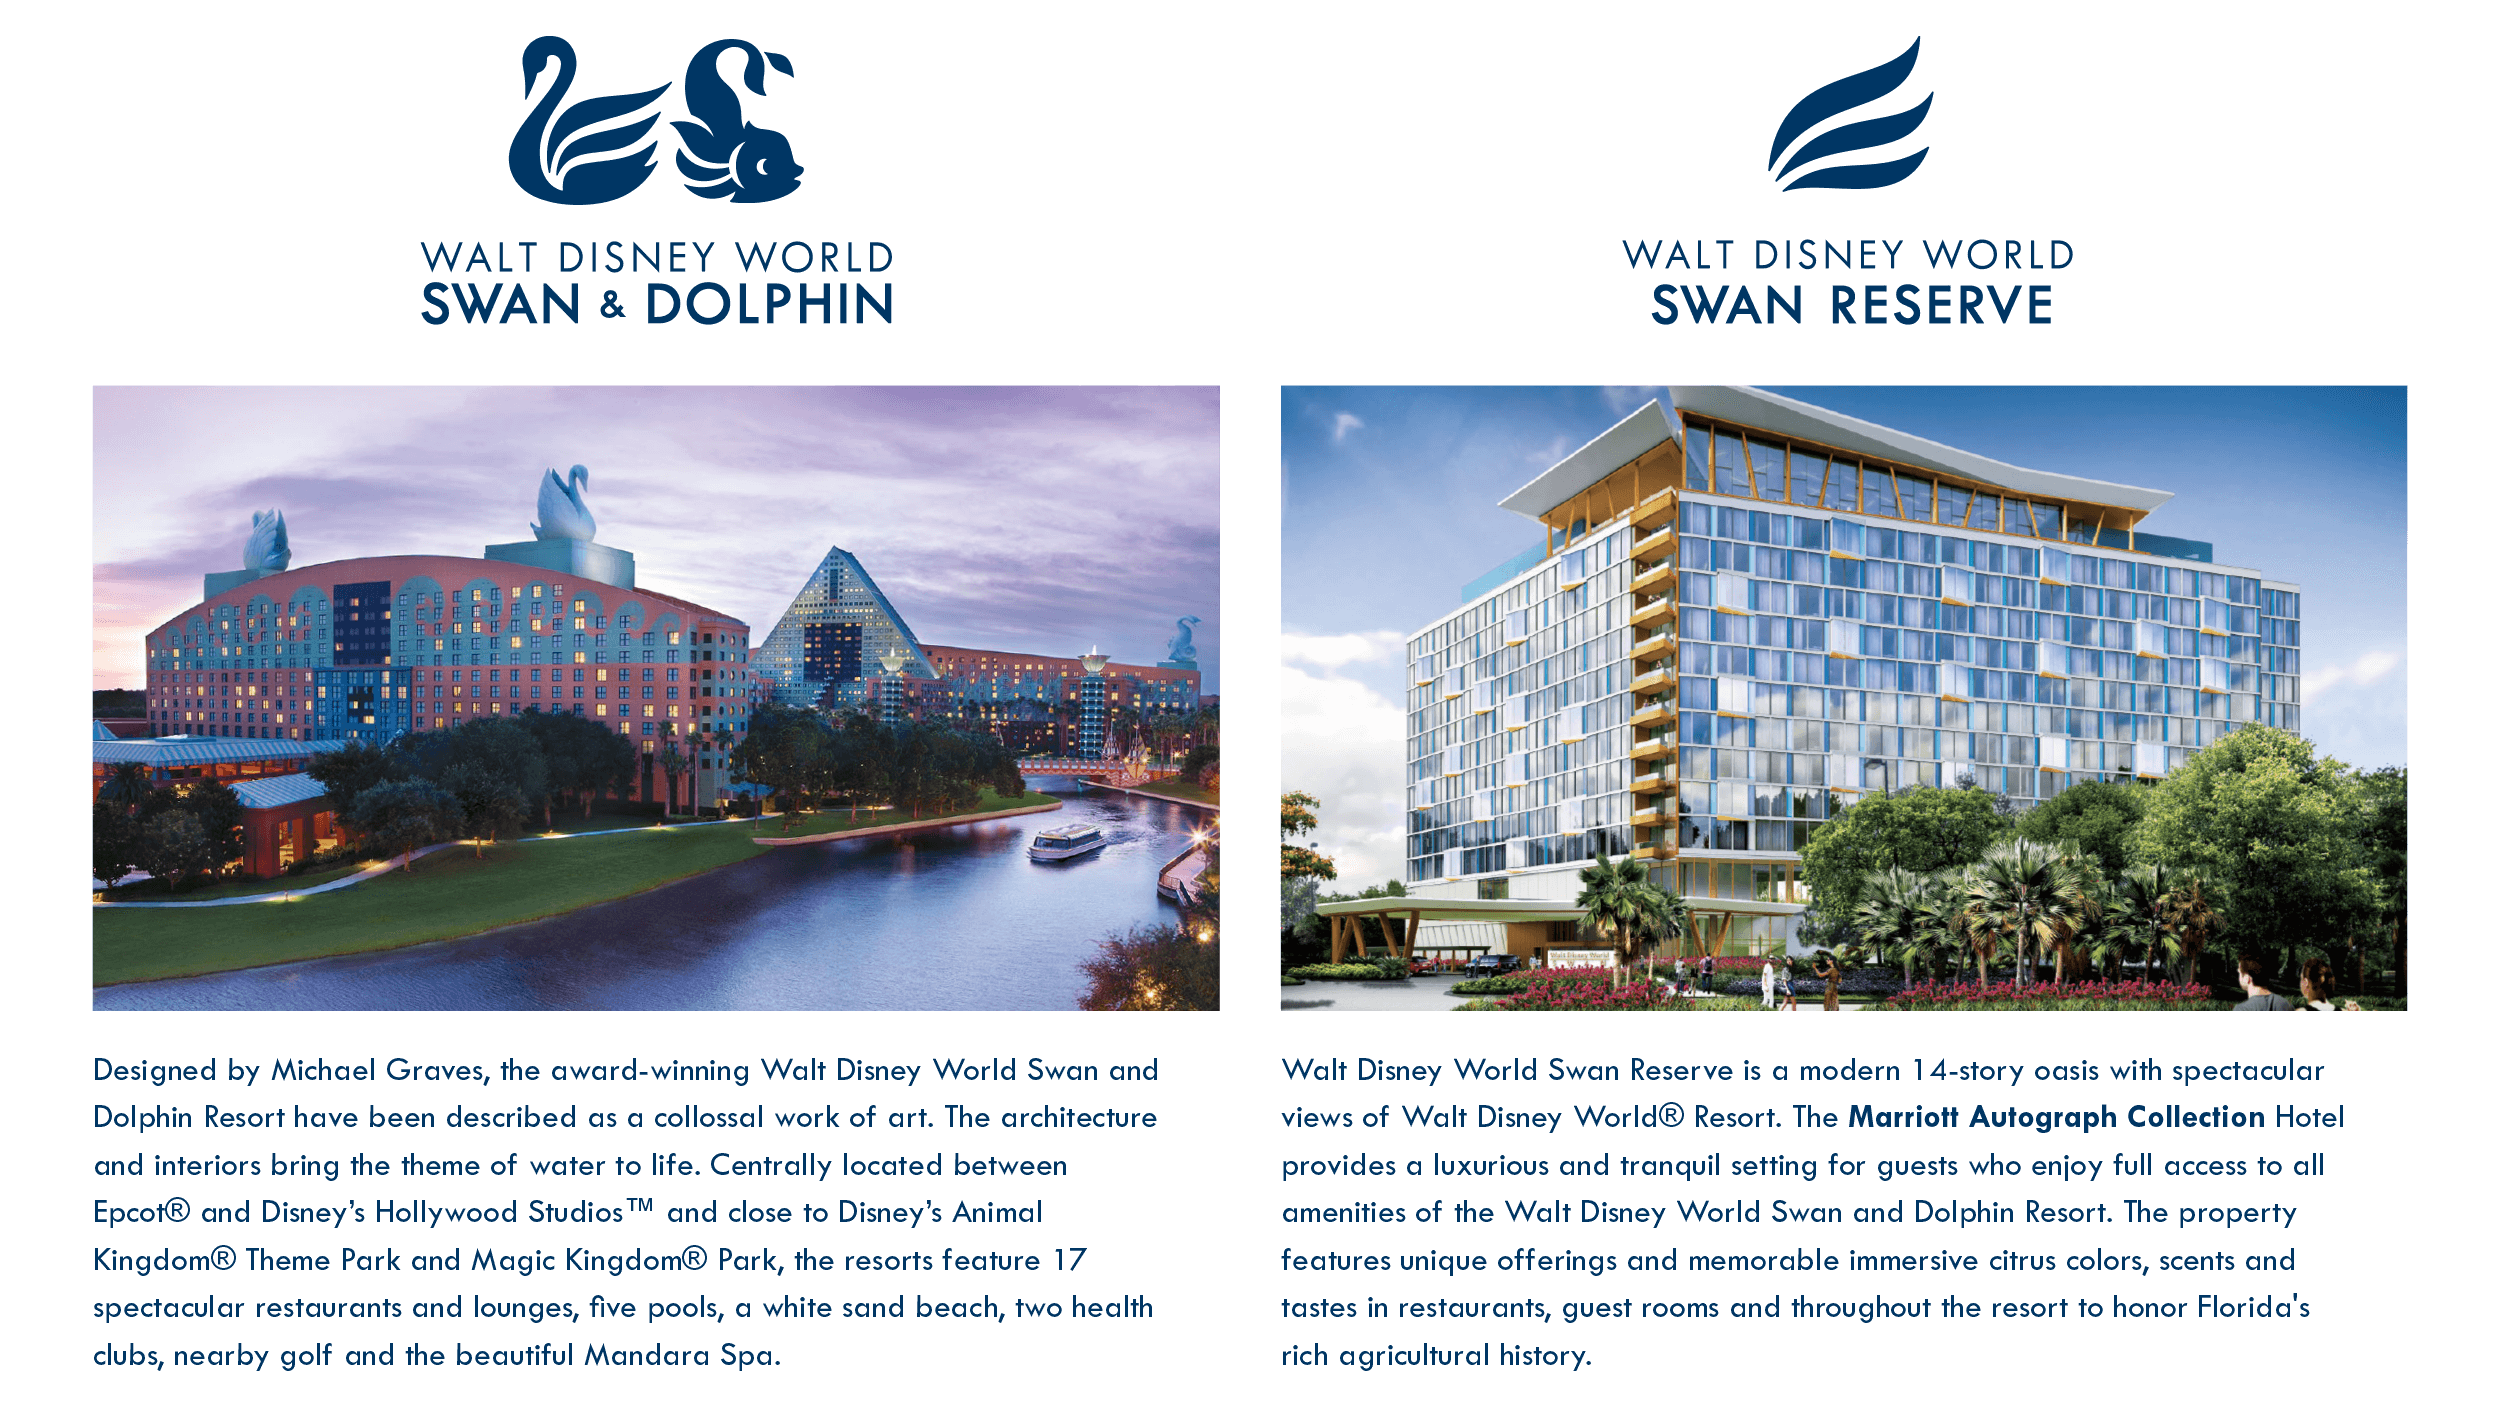 Walt Disney World Swan & Dolphin vs. Swan Reserve information